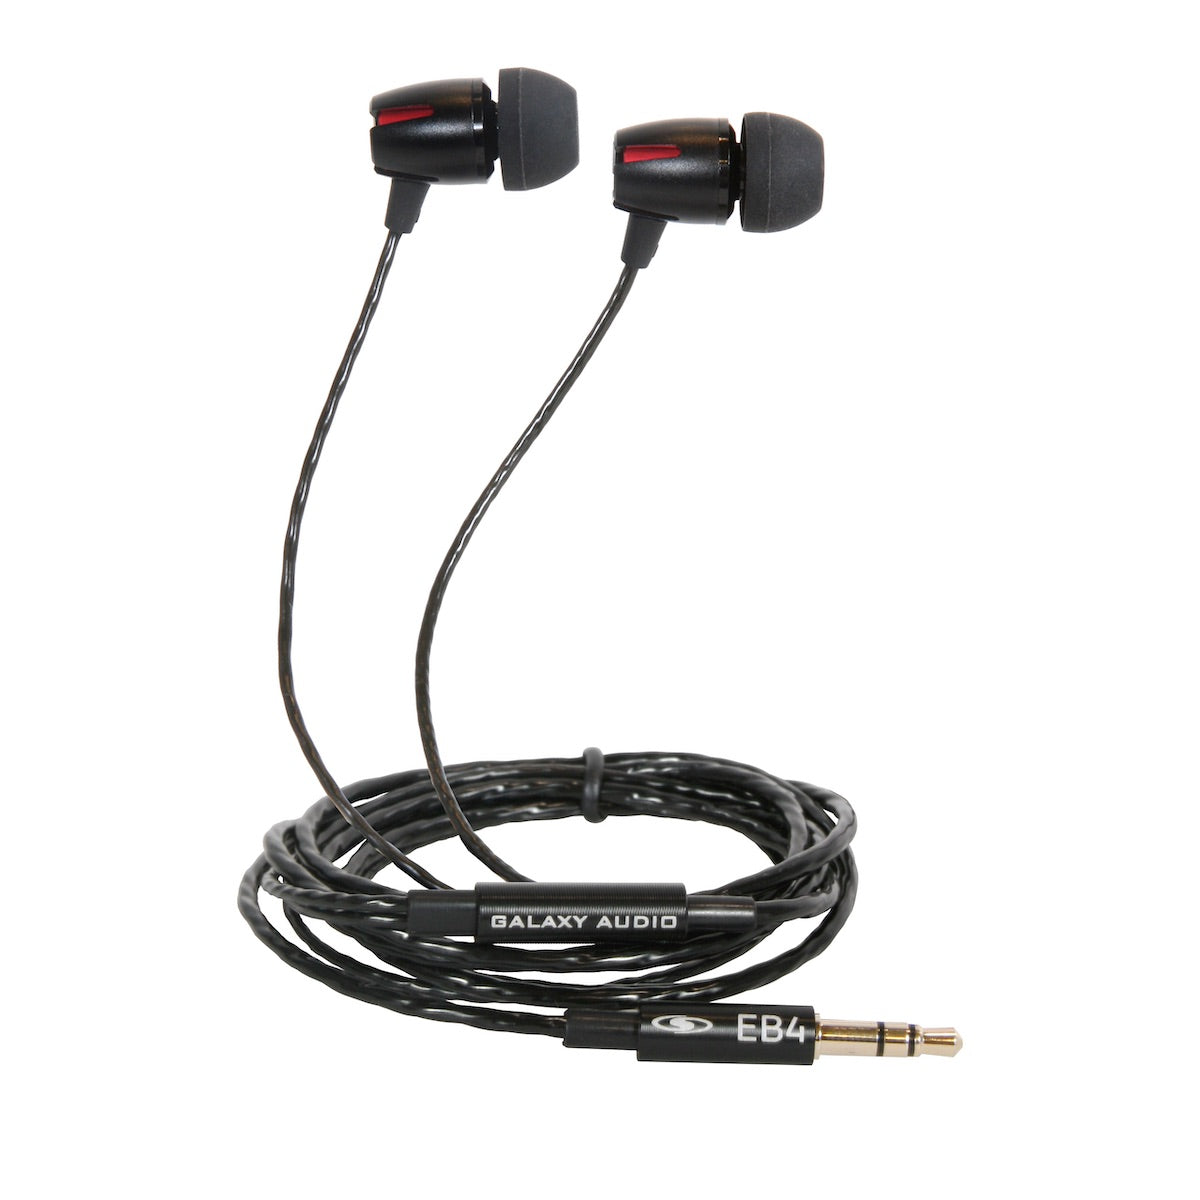 Galaxy Audio EB4 earbuds